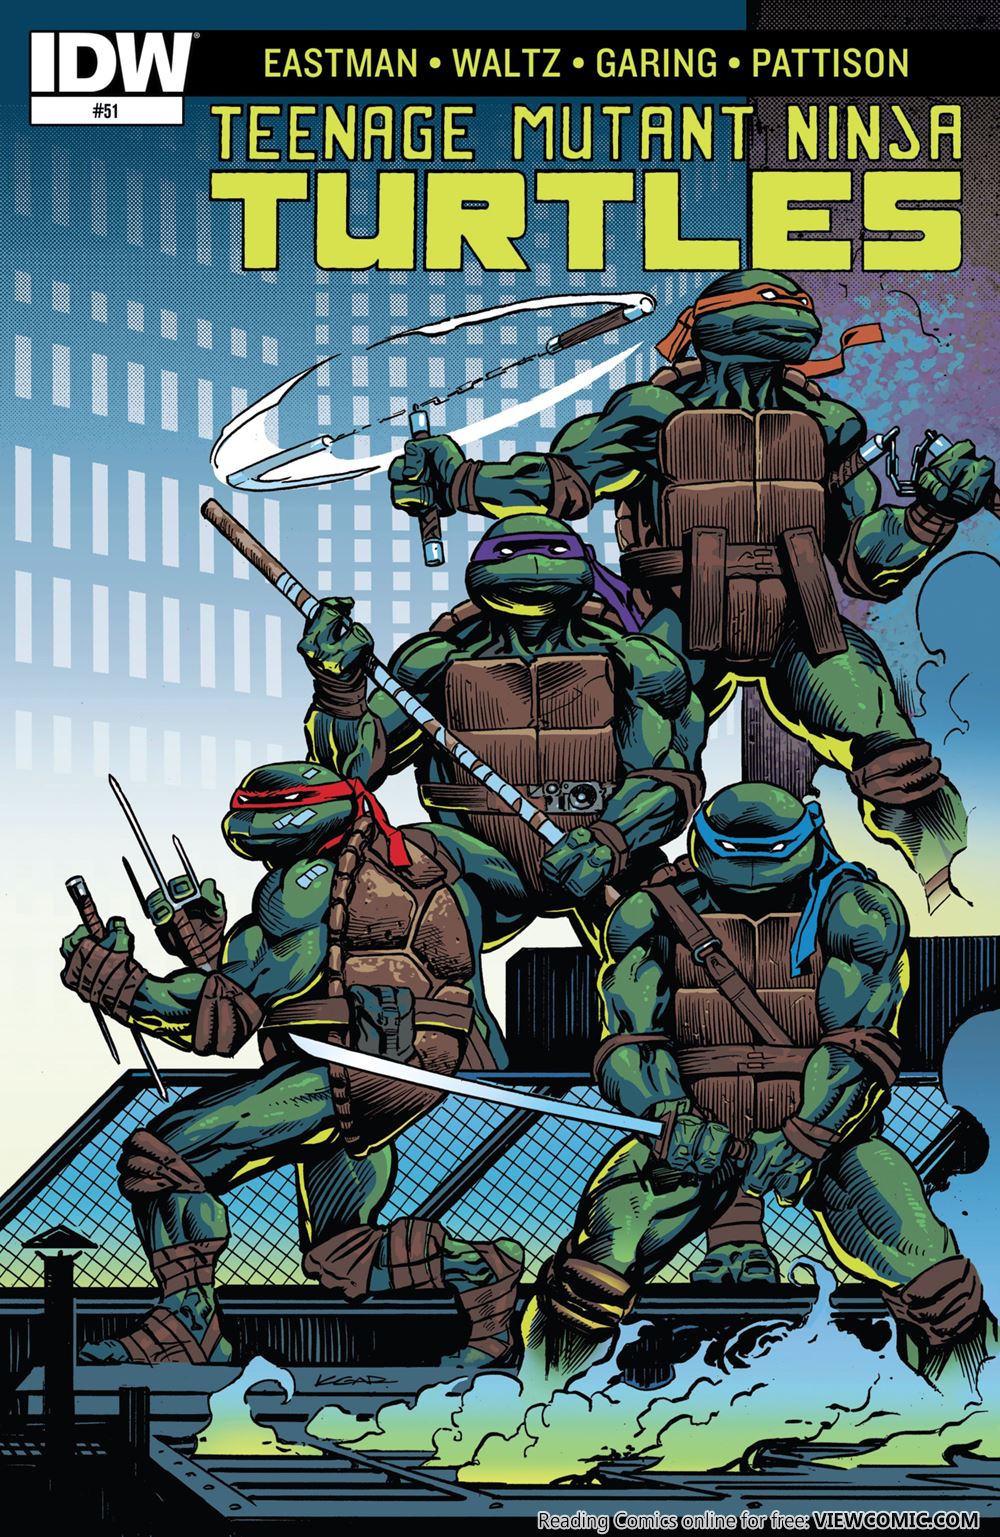 Ninja turtle comics online